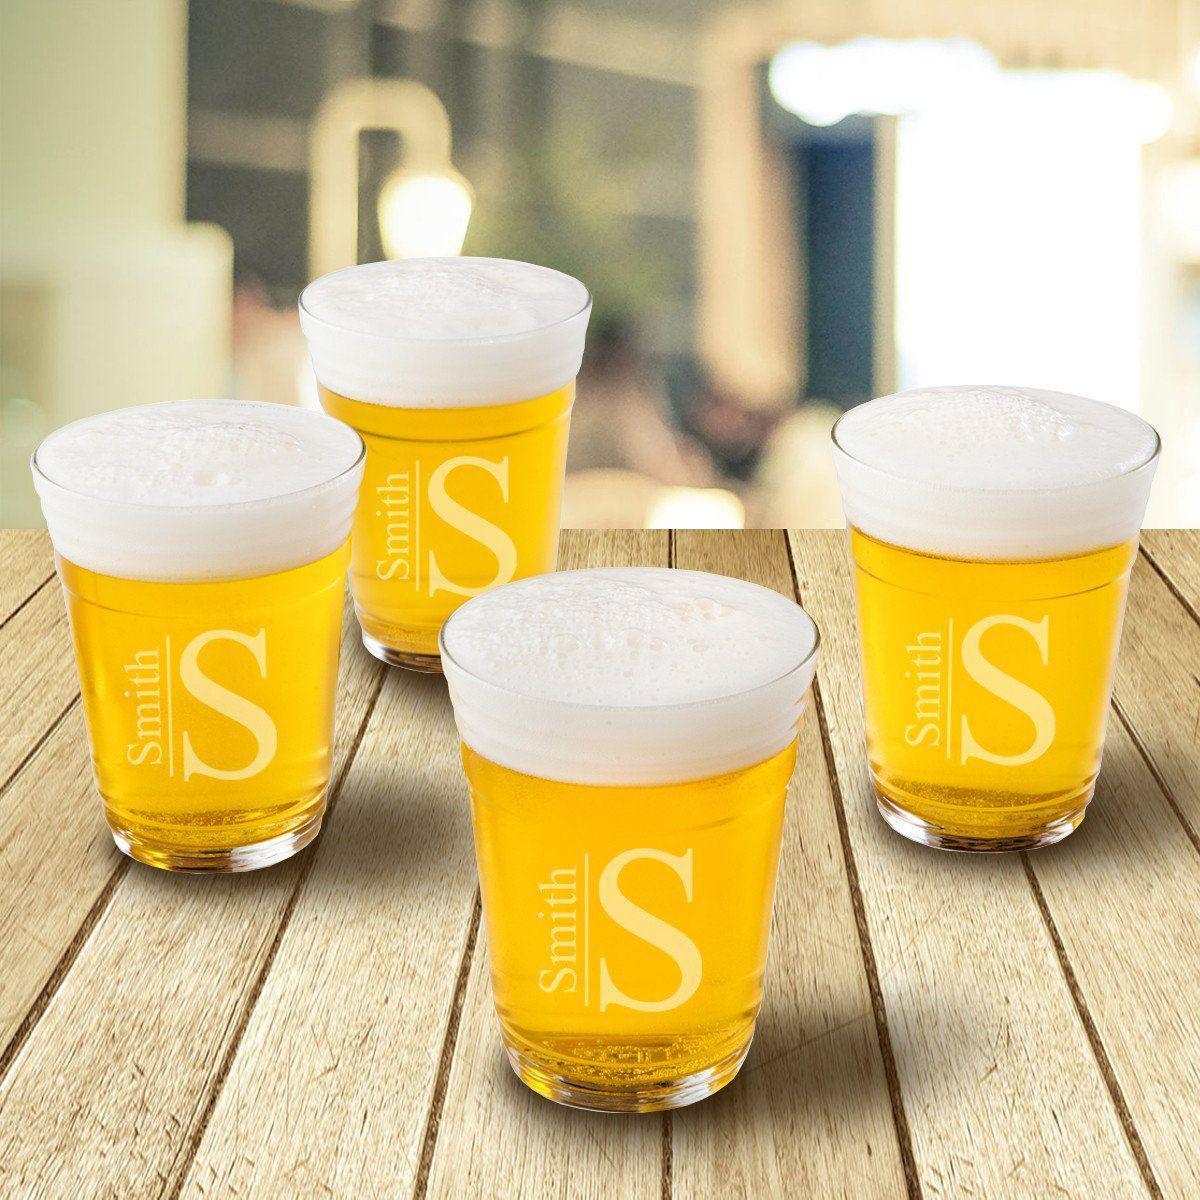 Monogrammed Beer Cup Glasses - Set of 4